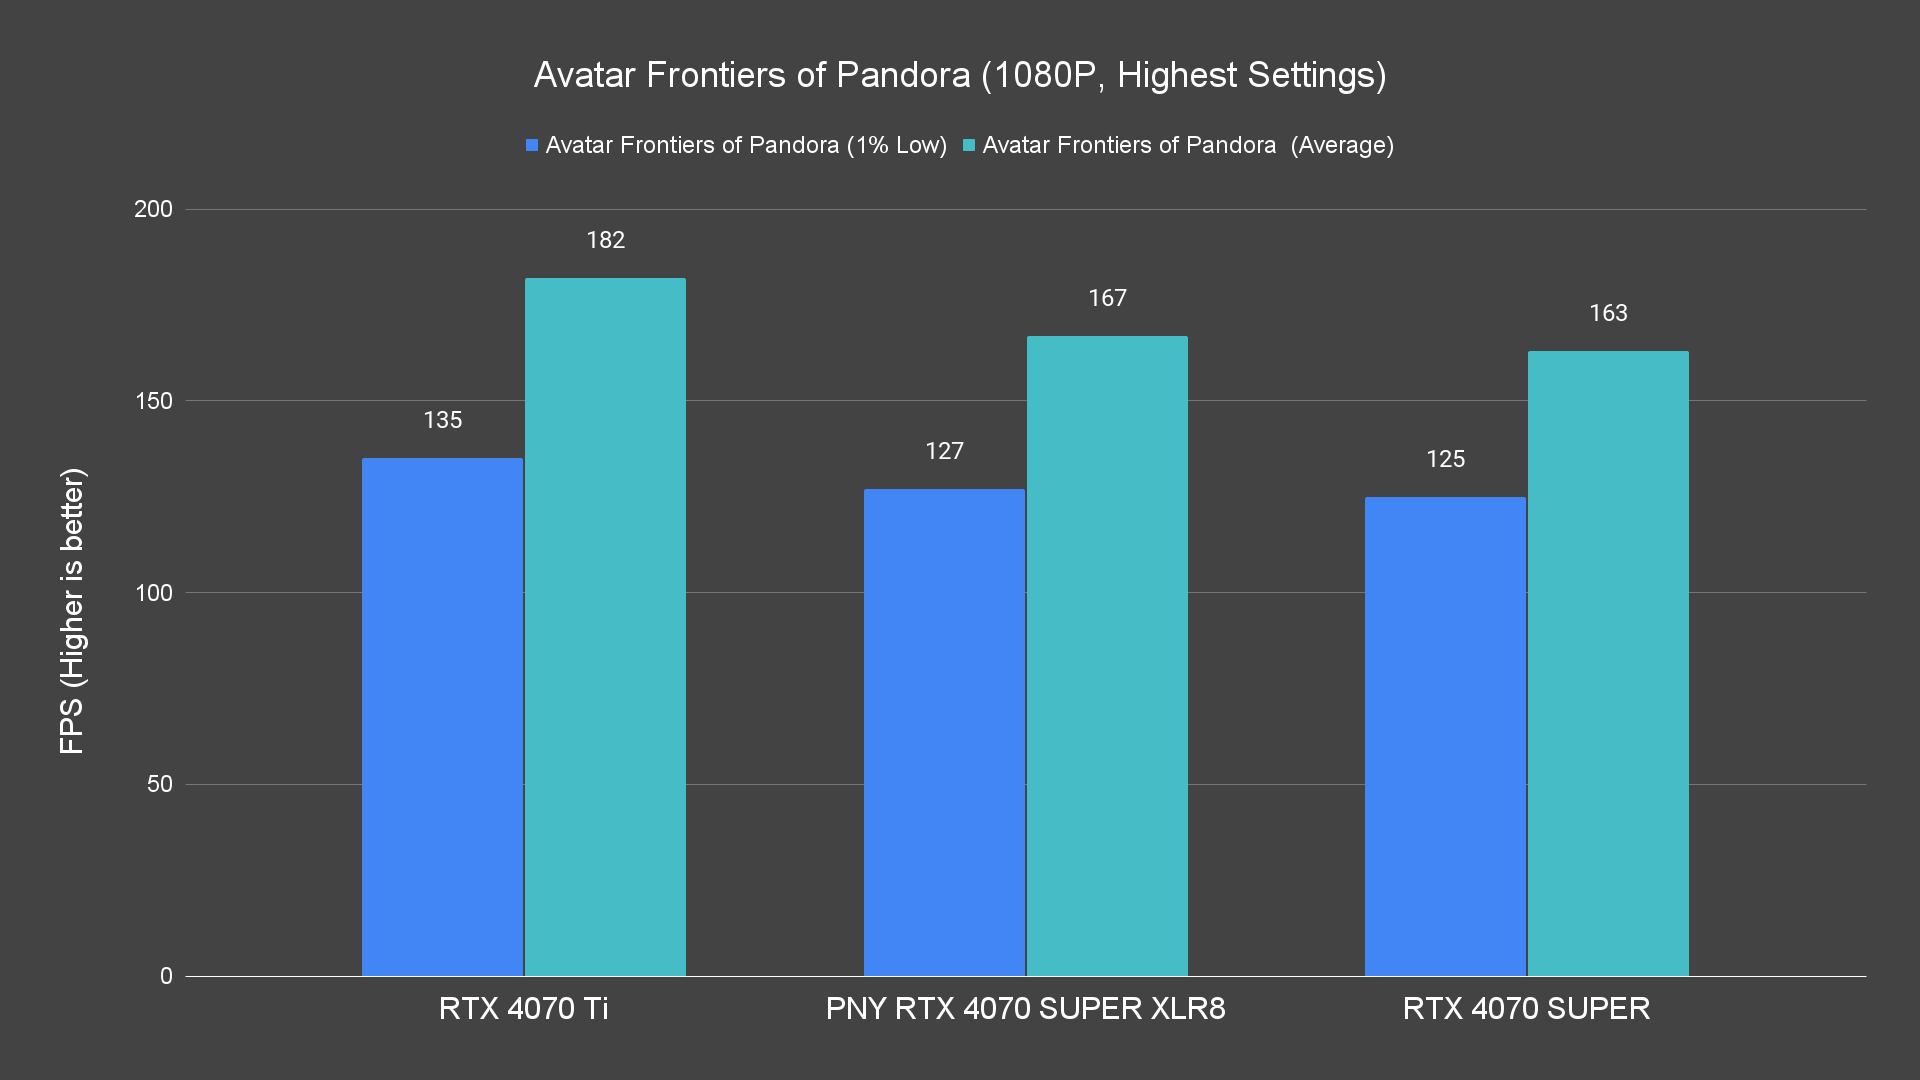 Avatar Frontiers of Pandora (1080P, Highest Settings) Raster PNY RTX 4070 SUPER XLR8